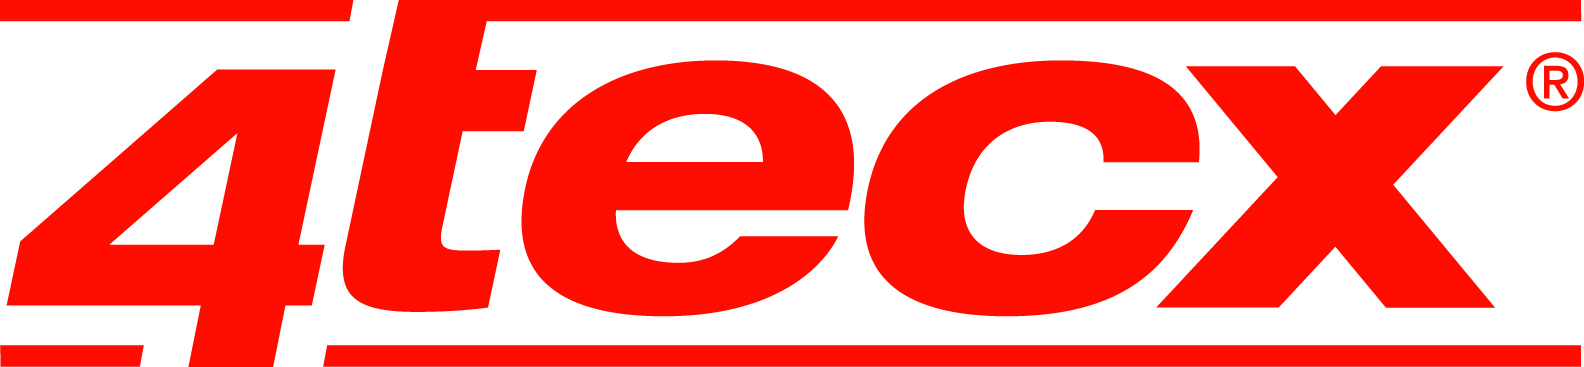 Logo 4Tecx poskl